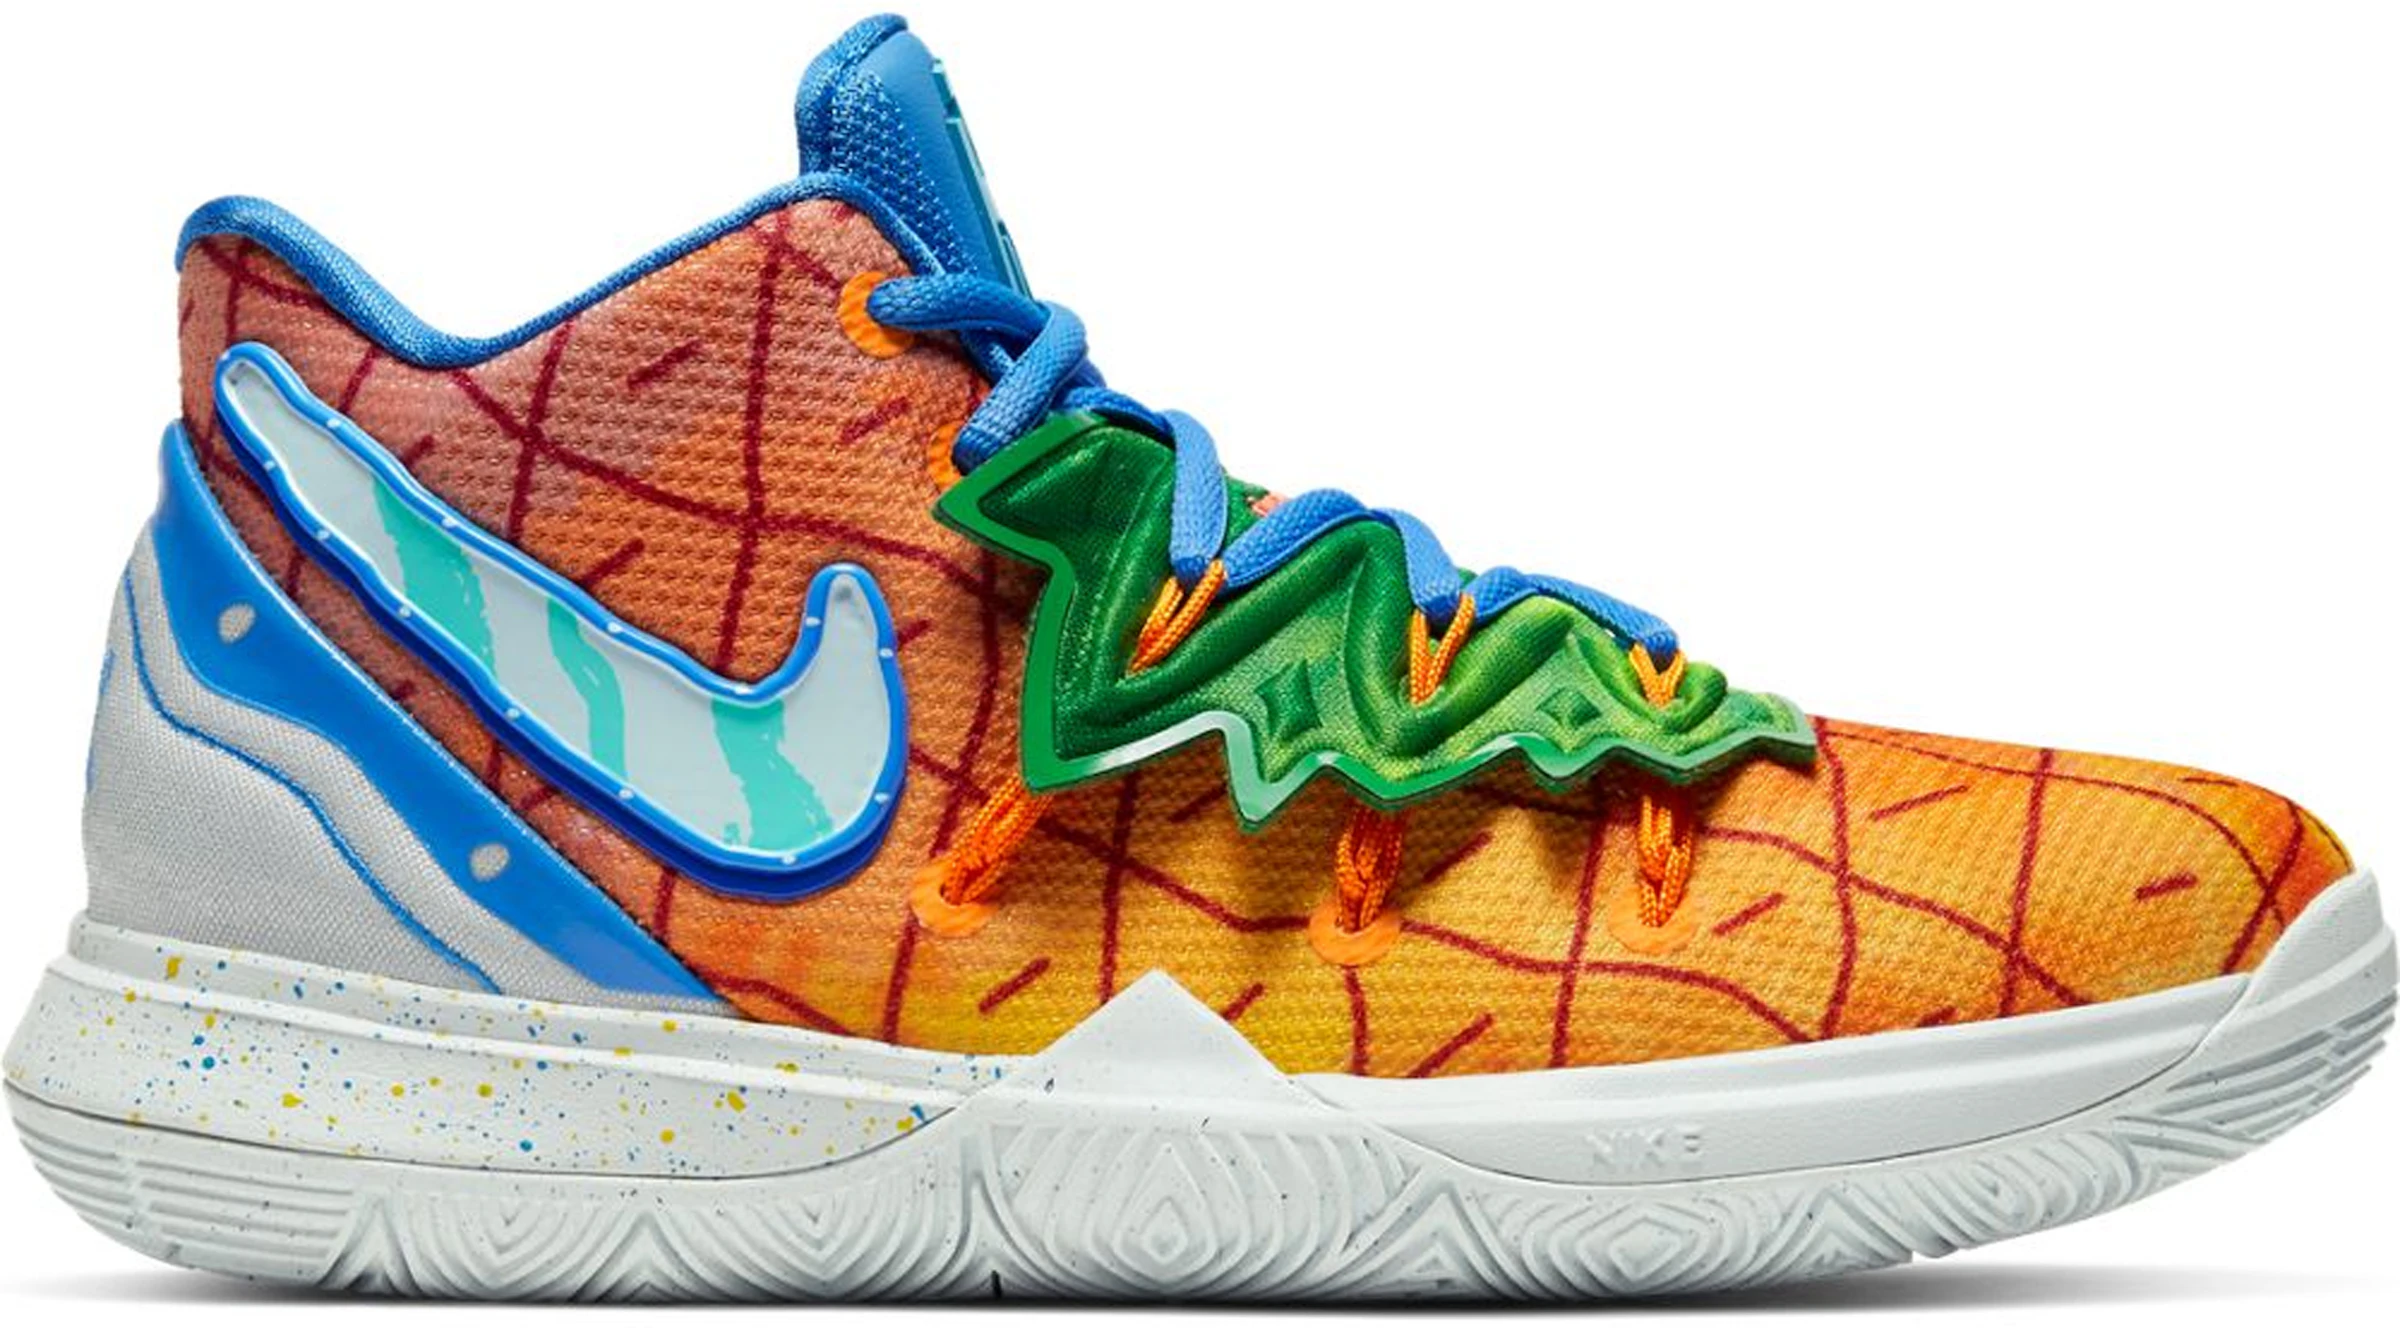 Compra Nike Basketball Spongebob sneakers nuevos -